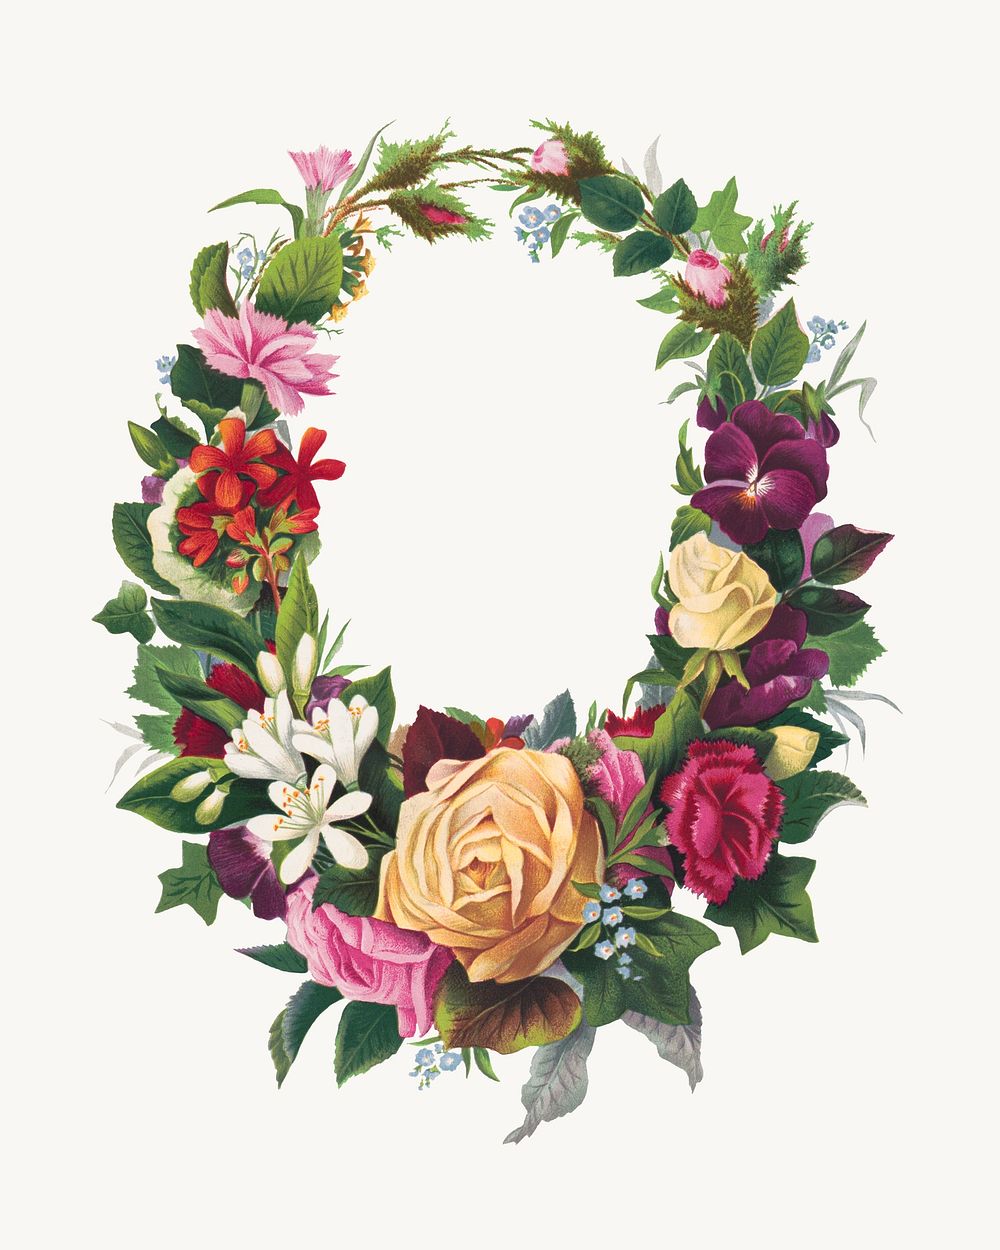 Vintage floral wreath psd illustration, remix from L. Prang & Co.